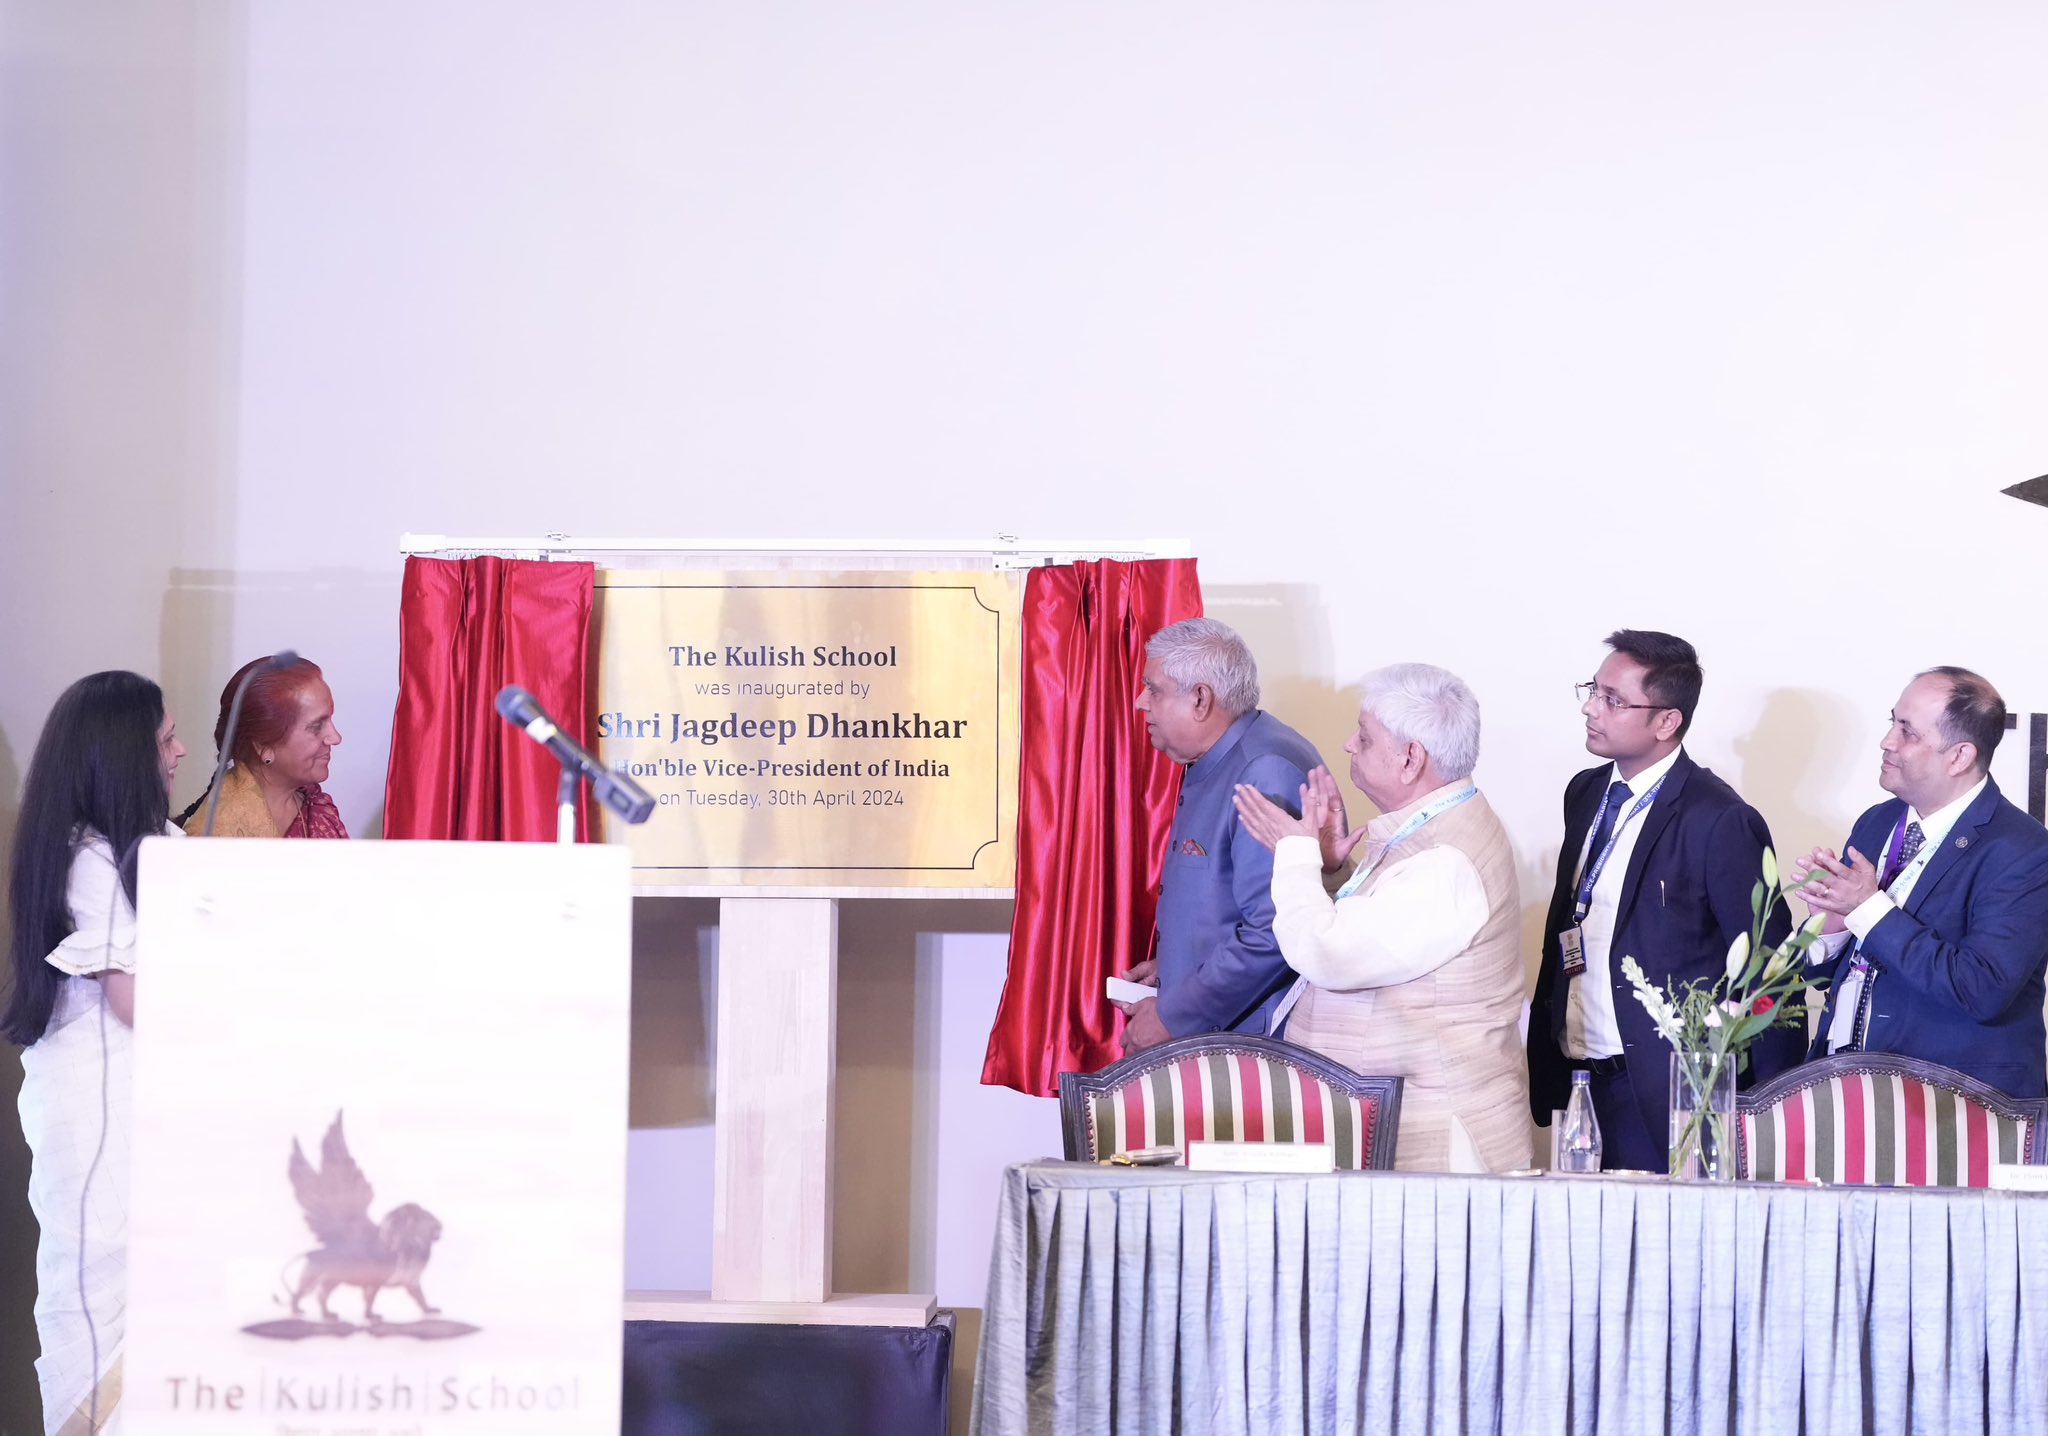 The Vice-President, Shri Jagdeep Dhankhar inaugurating The Kulish School in Jaipur, Rajasthan on April 30, 2024.